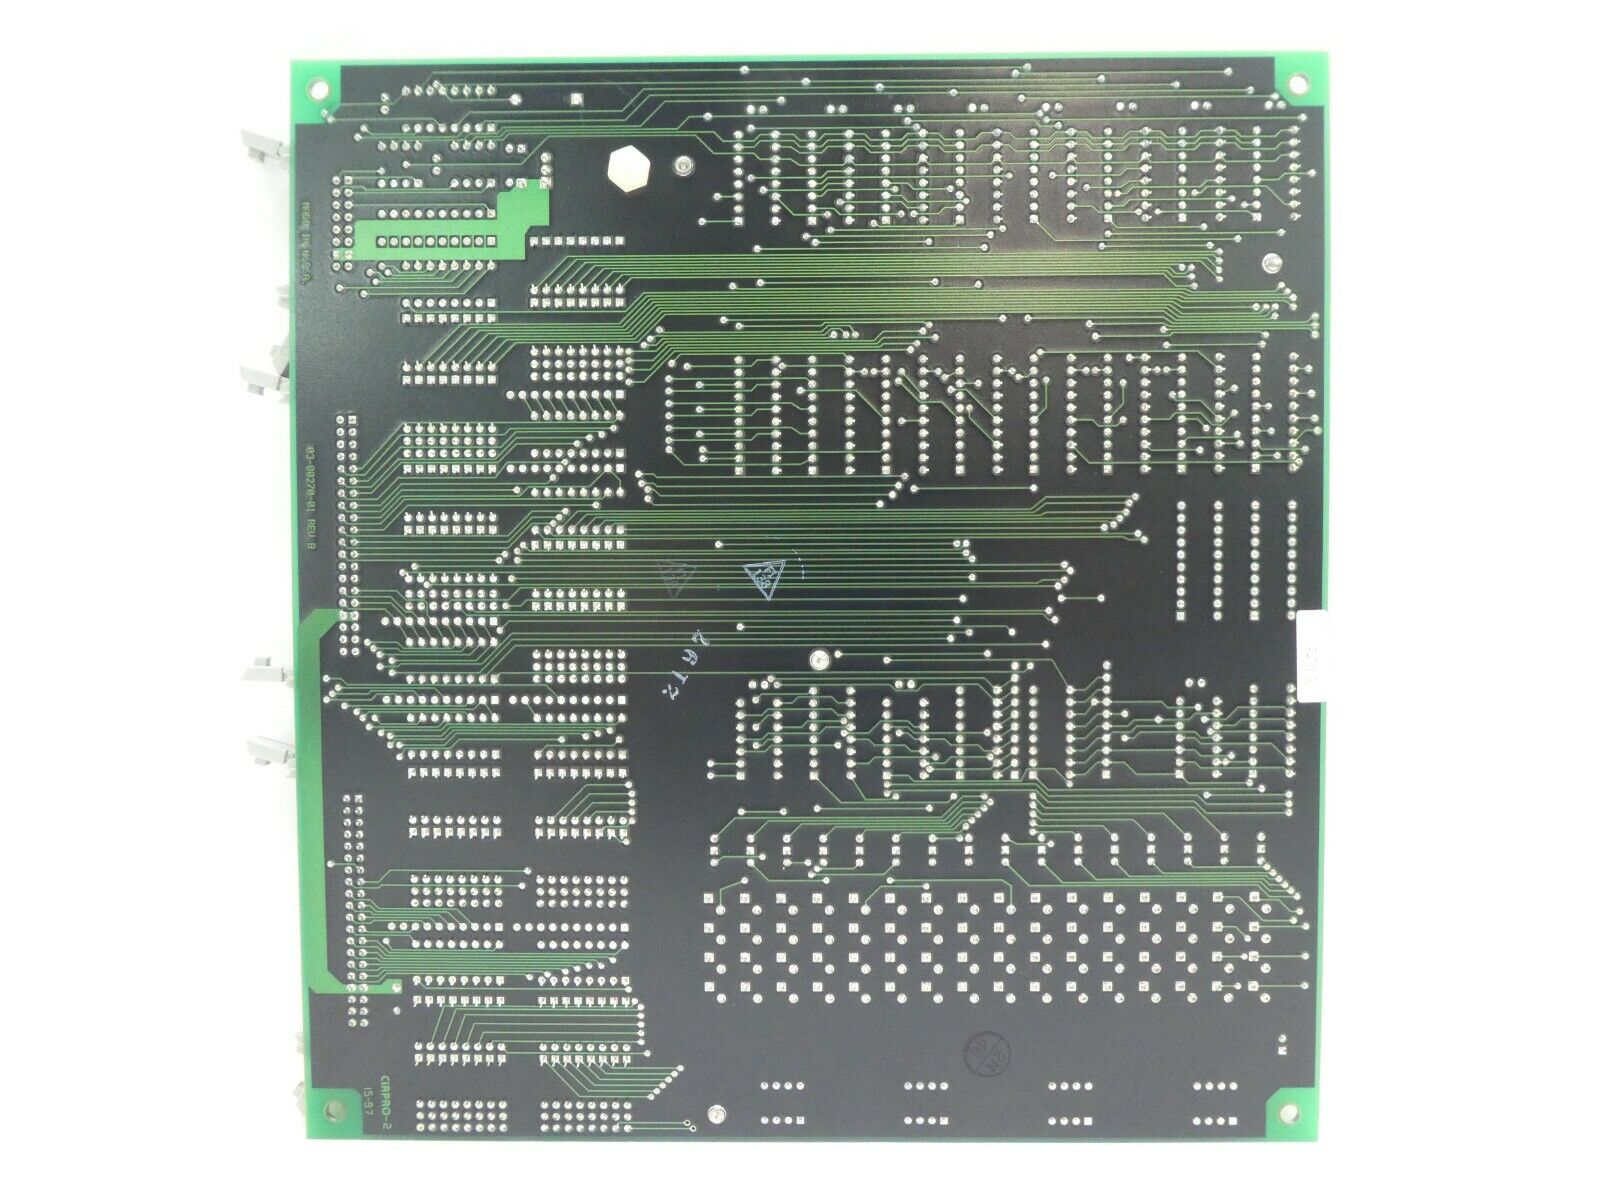 SVG Silicon Valley Group 99-80270-01 Sensor Multiplexor Board PCB Rev. B Working